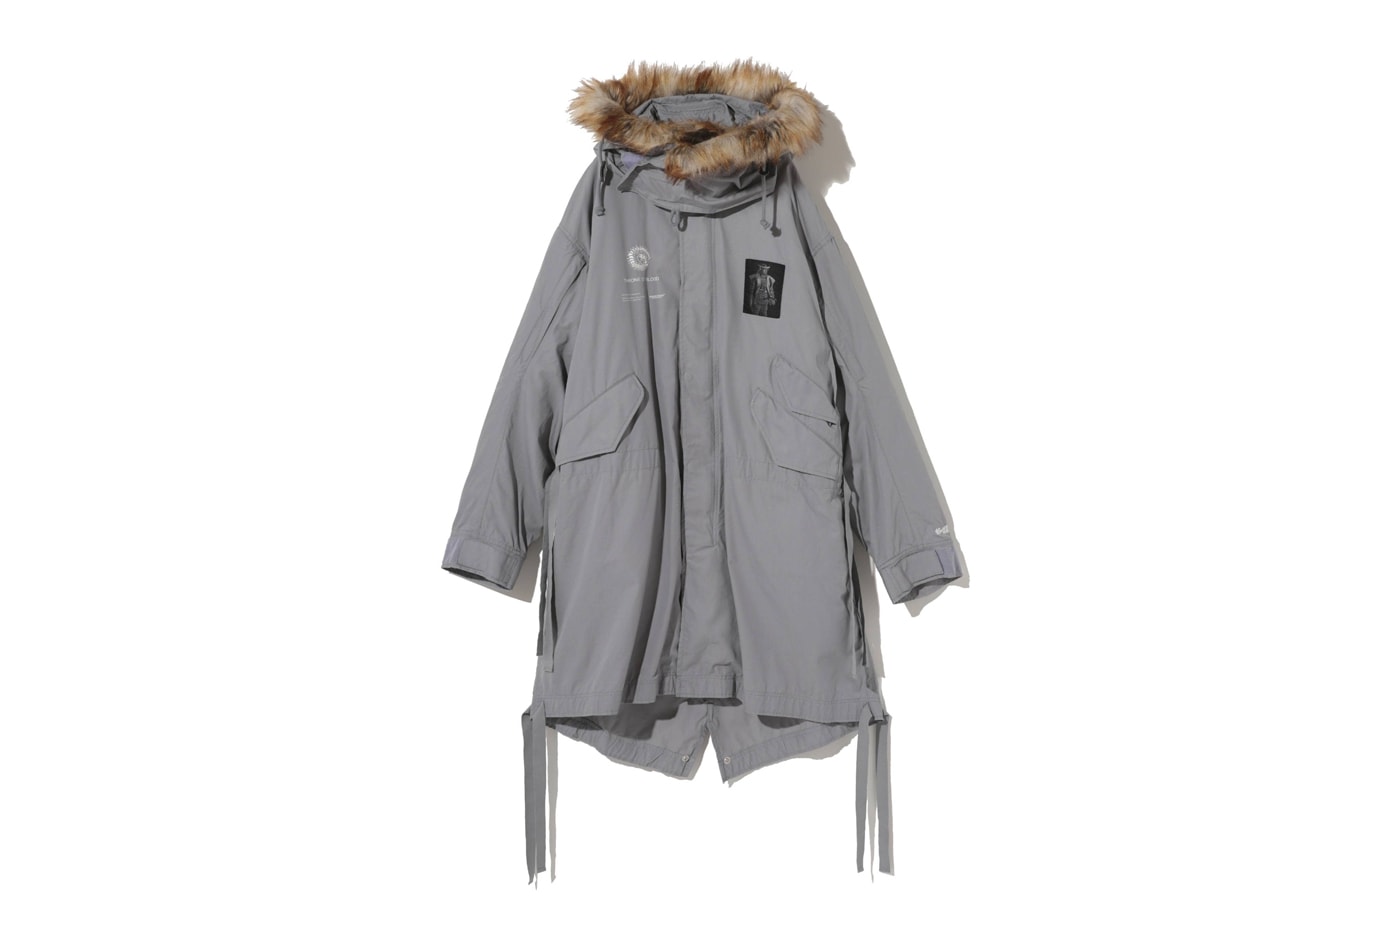 UNDERCOVER Akira Kurosawa Fall Winter 2020 Puffer Jackets menswear streetwear outerwear fw20